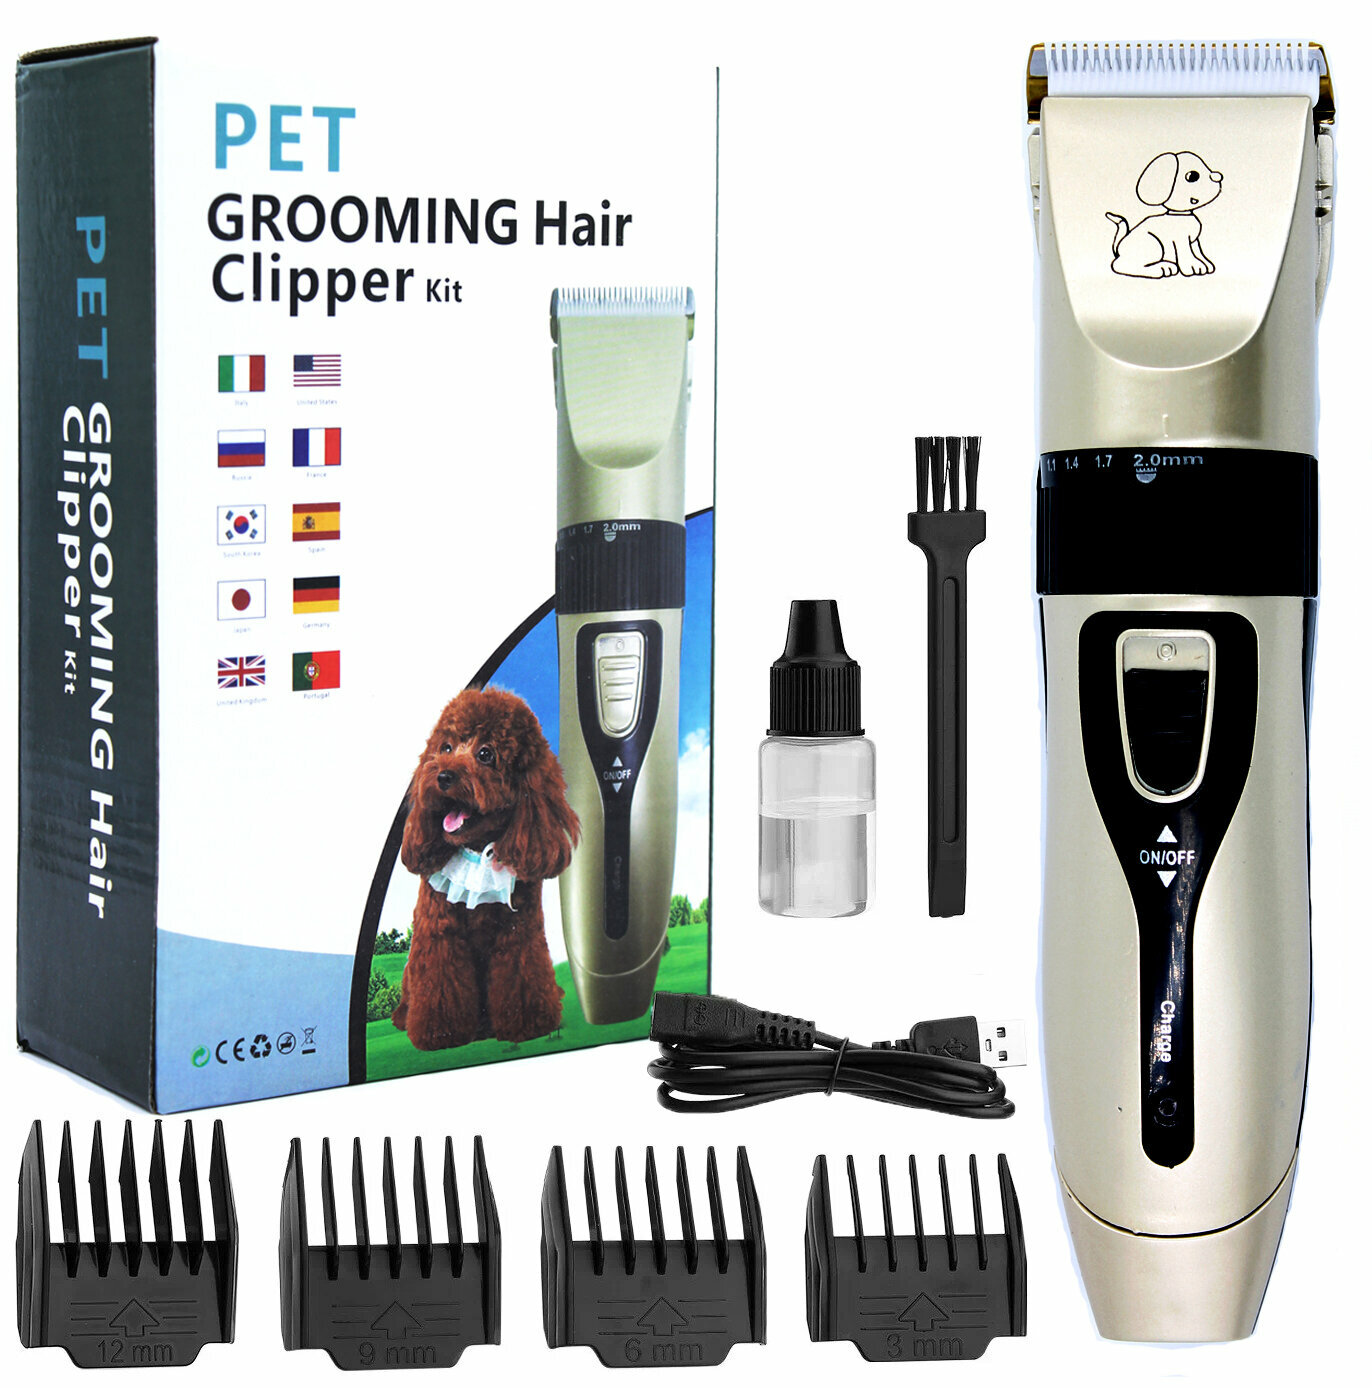 Машинка для стрижки животных / Машинка для стрижки собак / Машинка для стрижки кошек / Триммер для стрижки животных / Pet Grooming Hair Clipper Kit